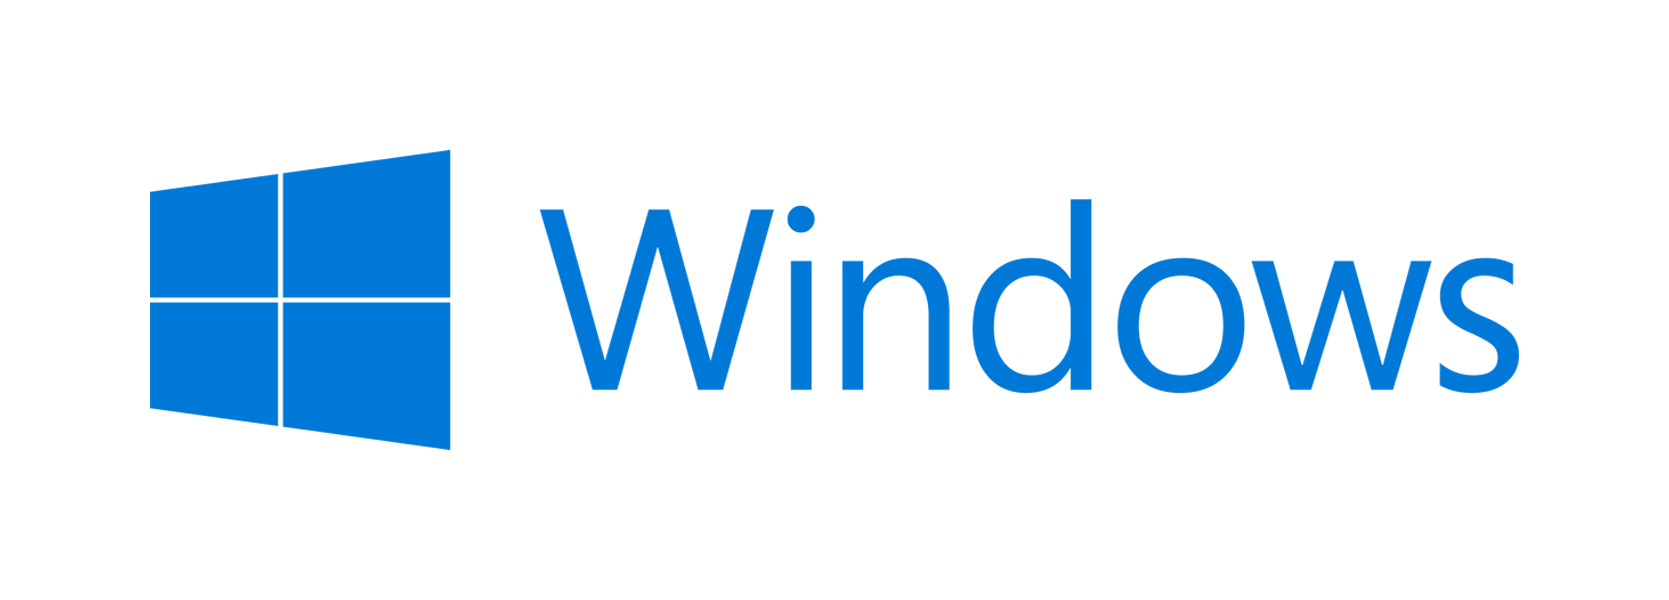 Current Microsoft Logo - Microsoft Trademark & Brand Guidelines | Trademarks